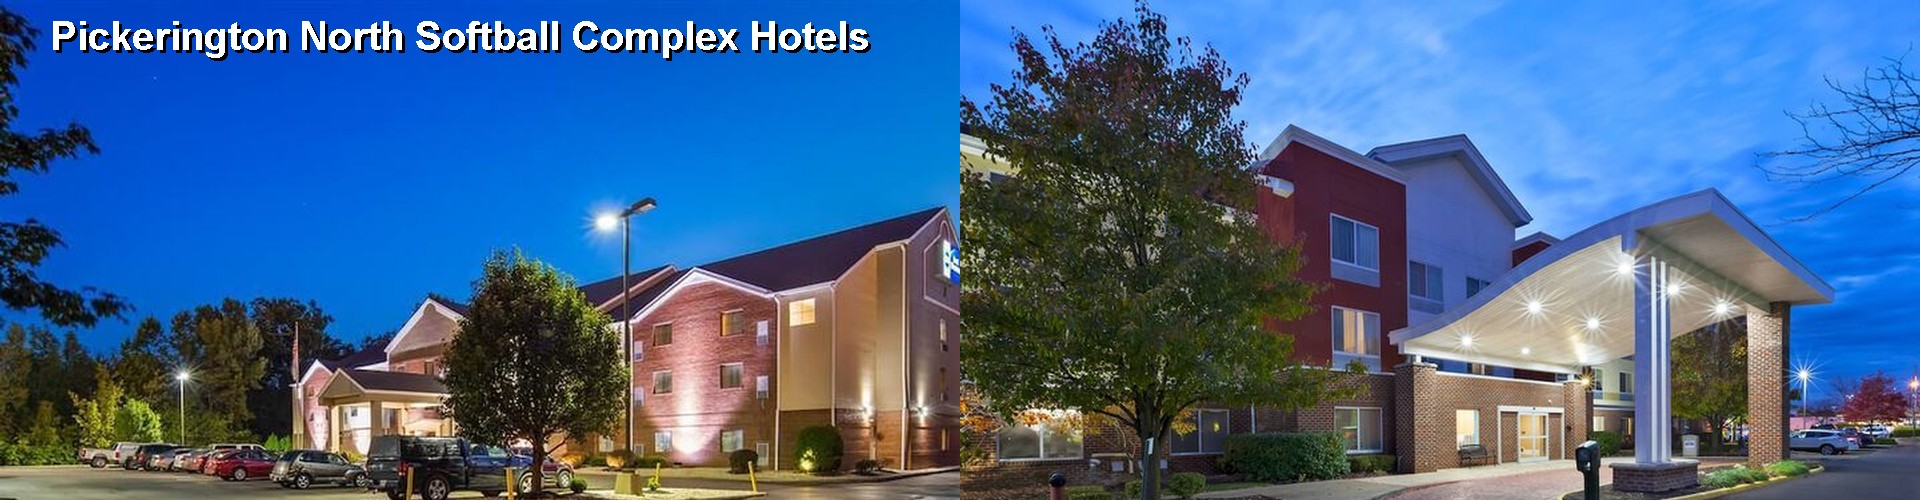 4 Best Hotels near Pickerington North Softball Complex